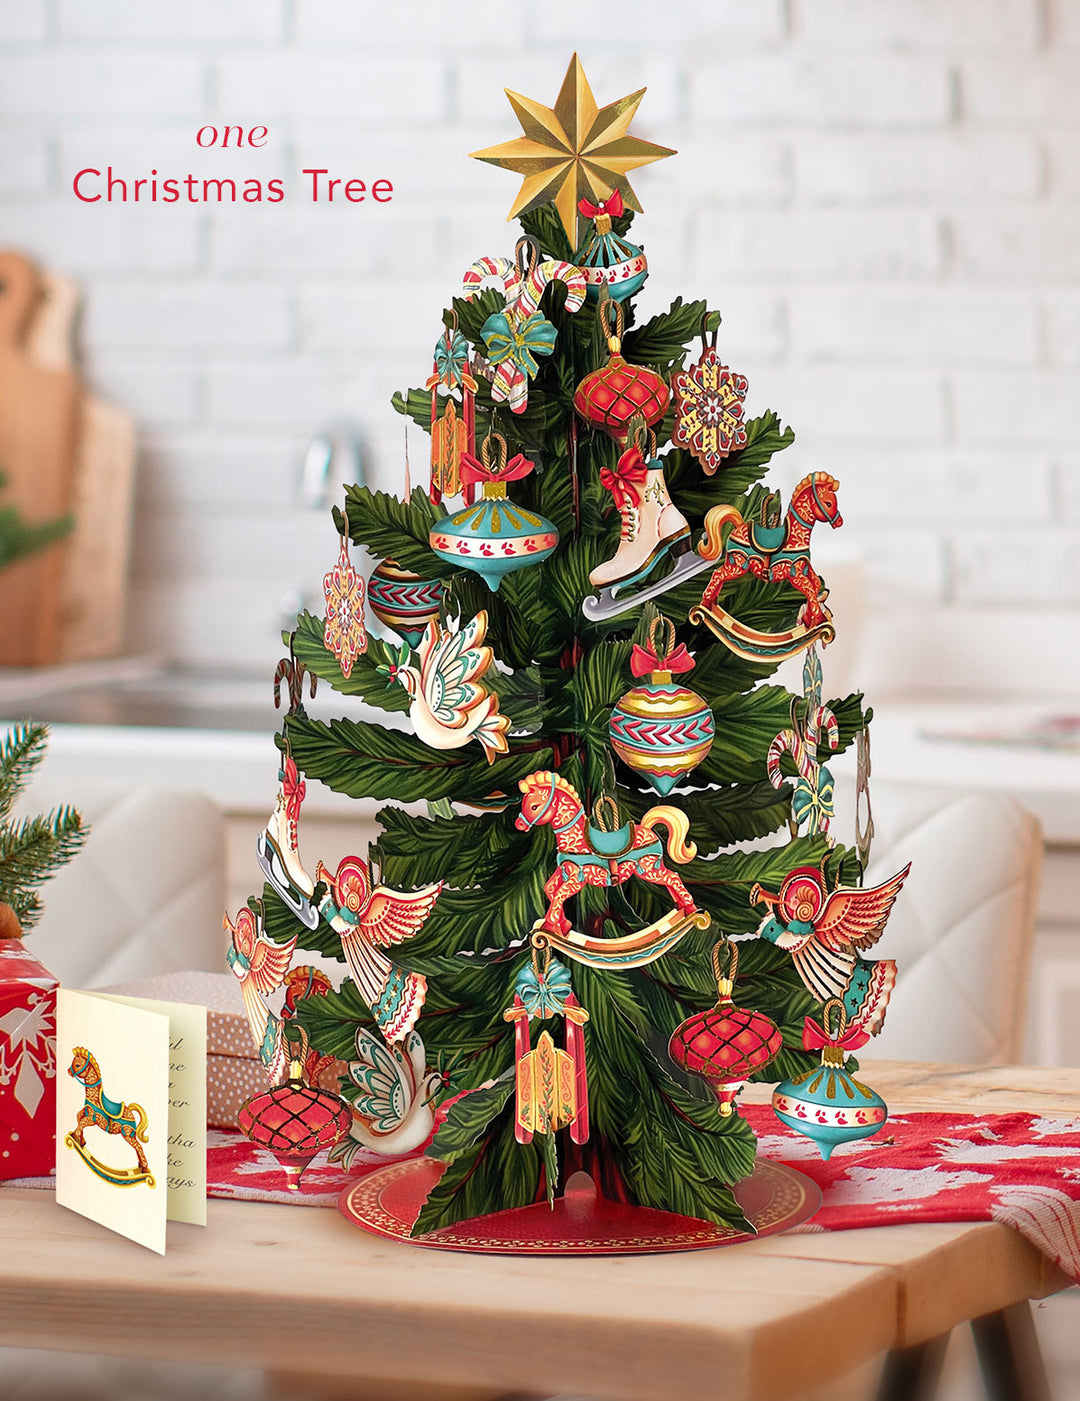 Bundle includes one Christmas Tree